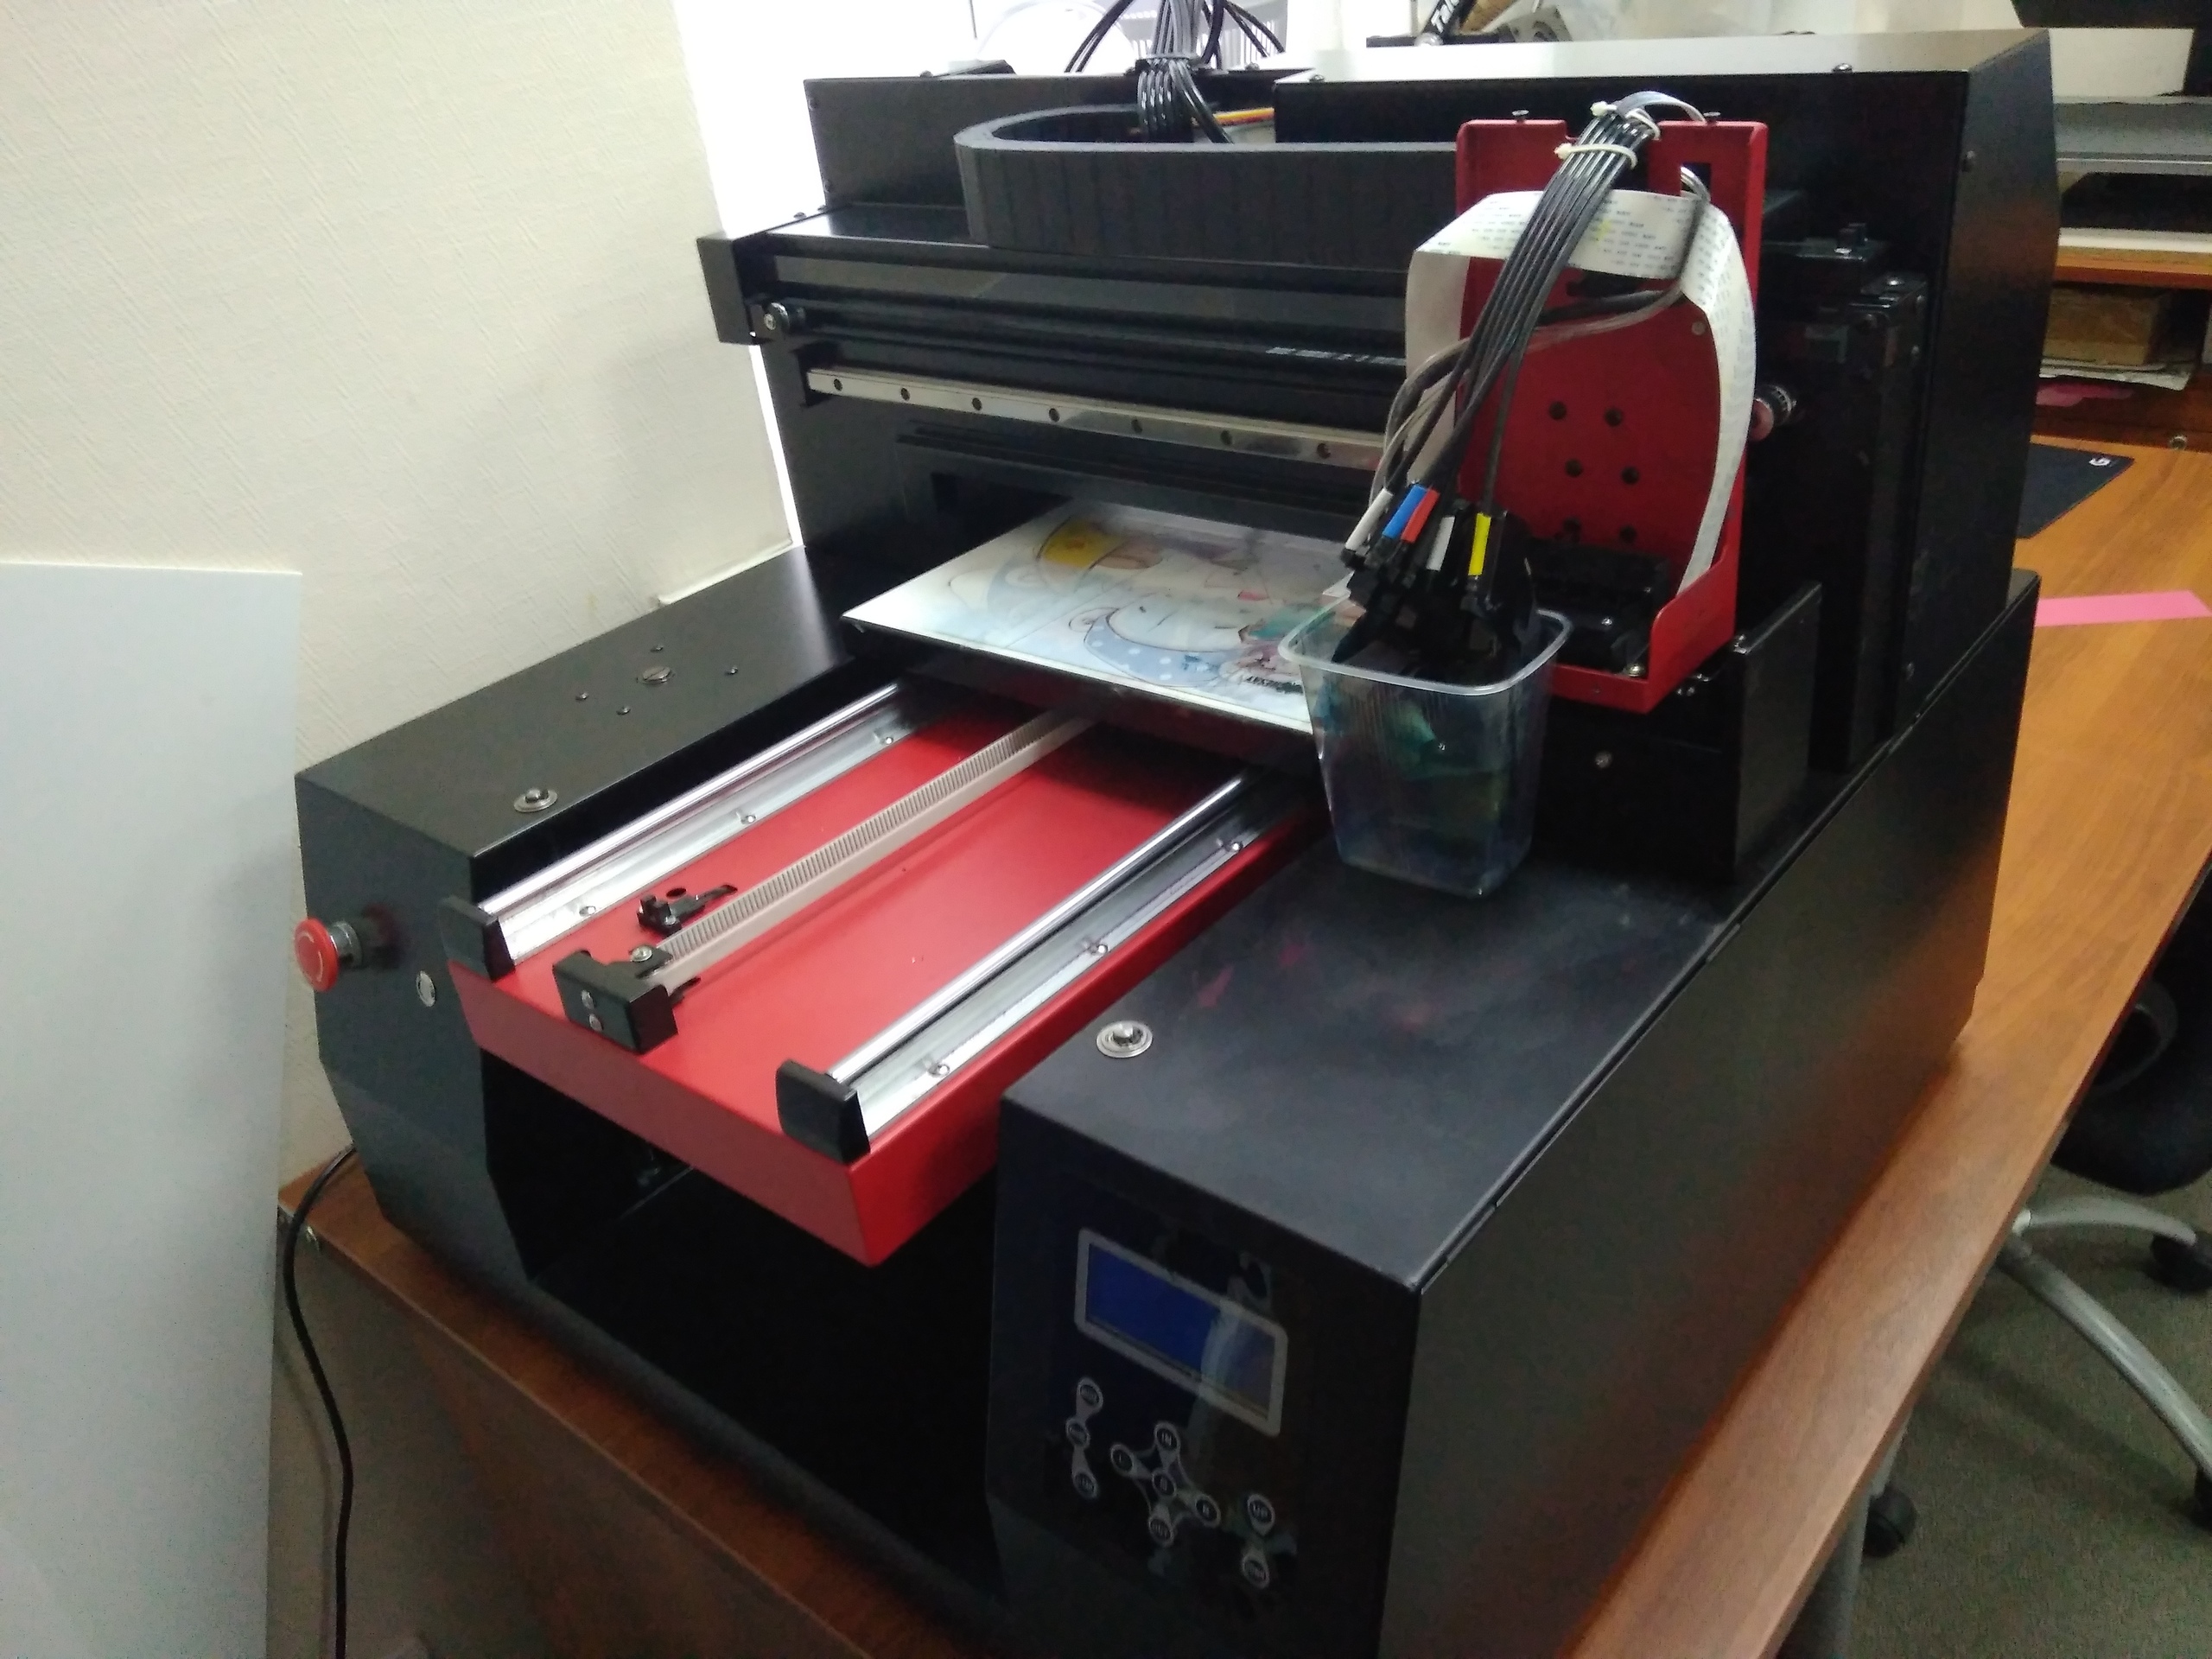 Китайский уф. УФ принтер xp600. УФ принтер Эпсон. УФ принтер на базе Эпсон л1300. UV принтер Epson XP-600.